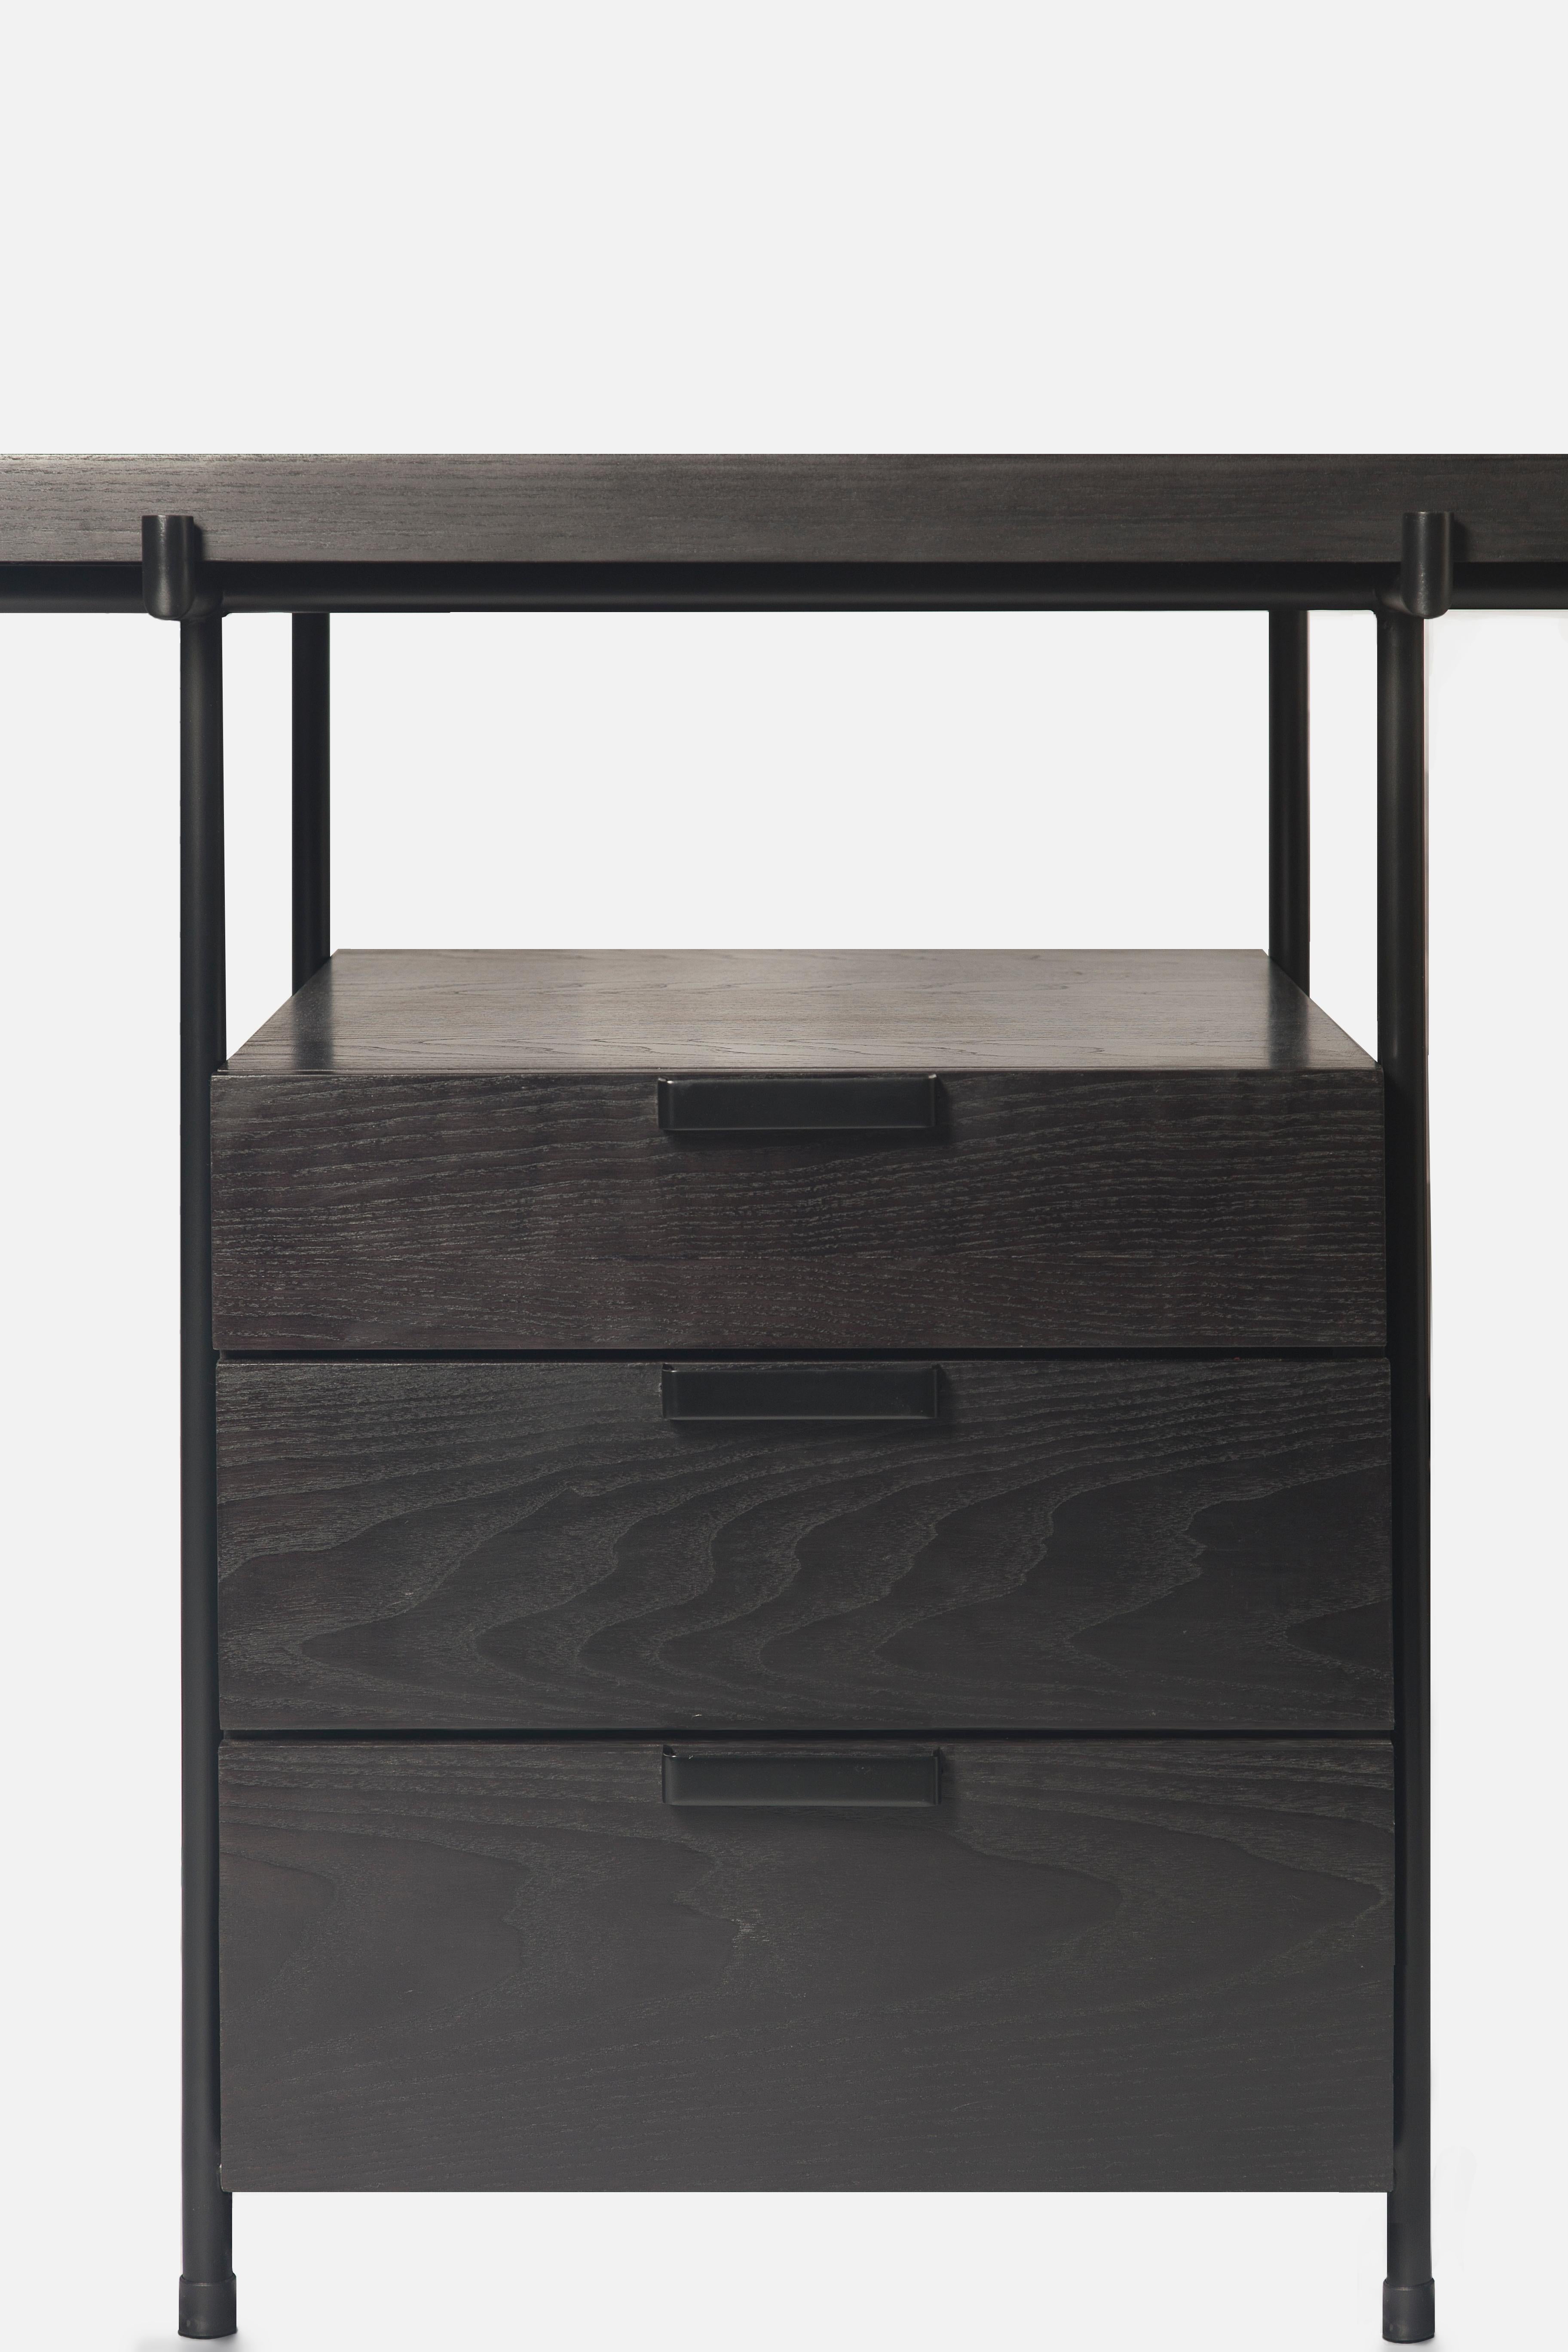 Black Desk Files Drawers, Wood and Metal, Brazilian Mid Century Modern Style 2